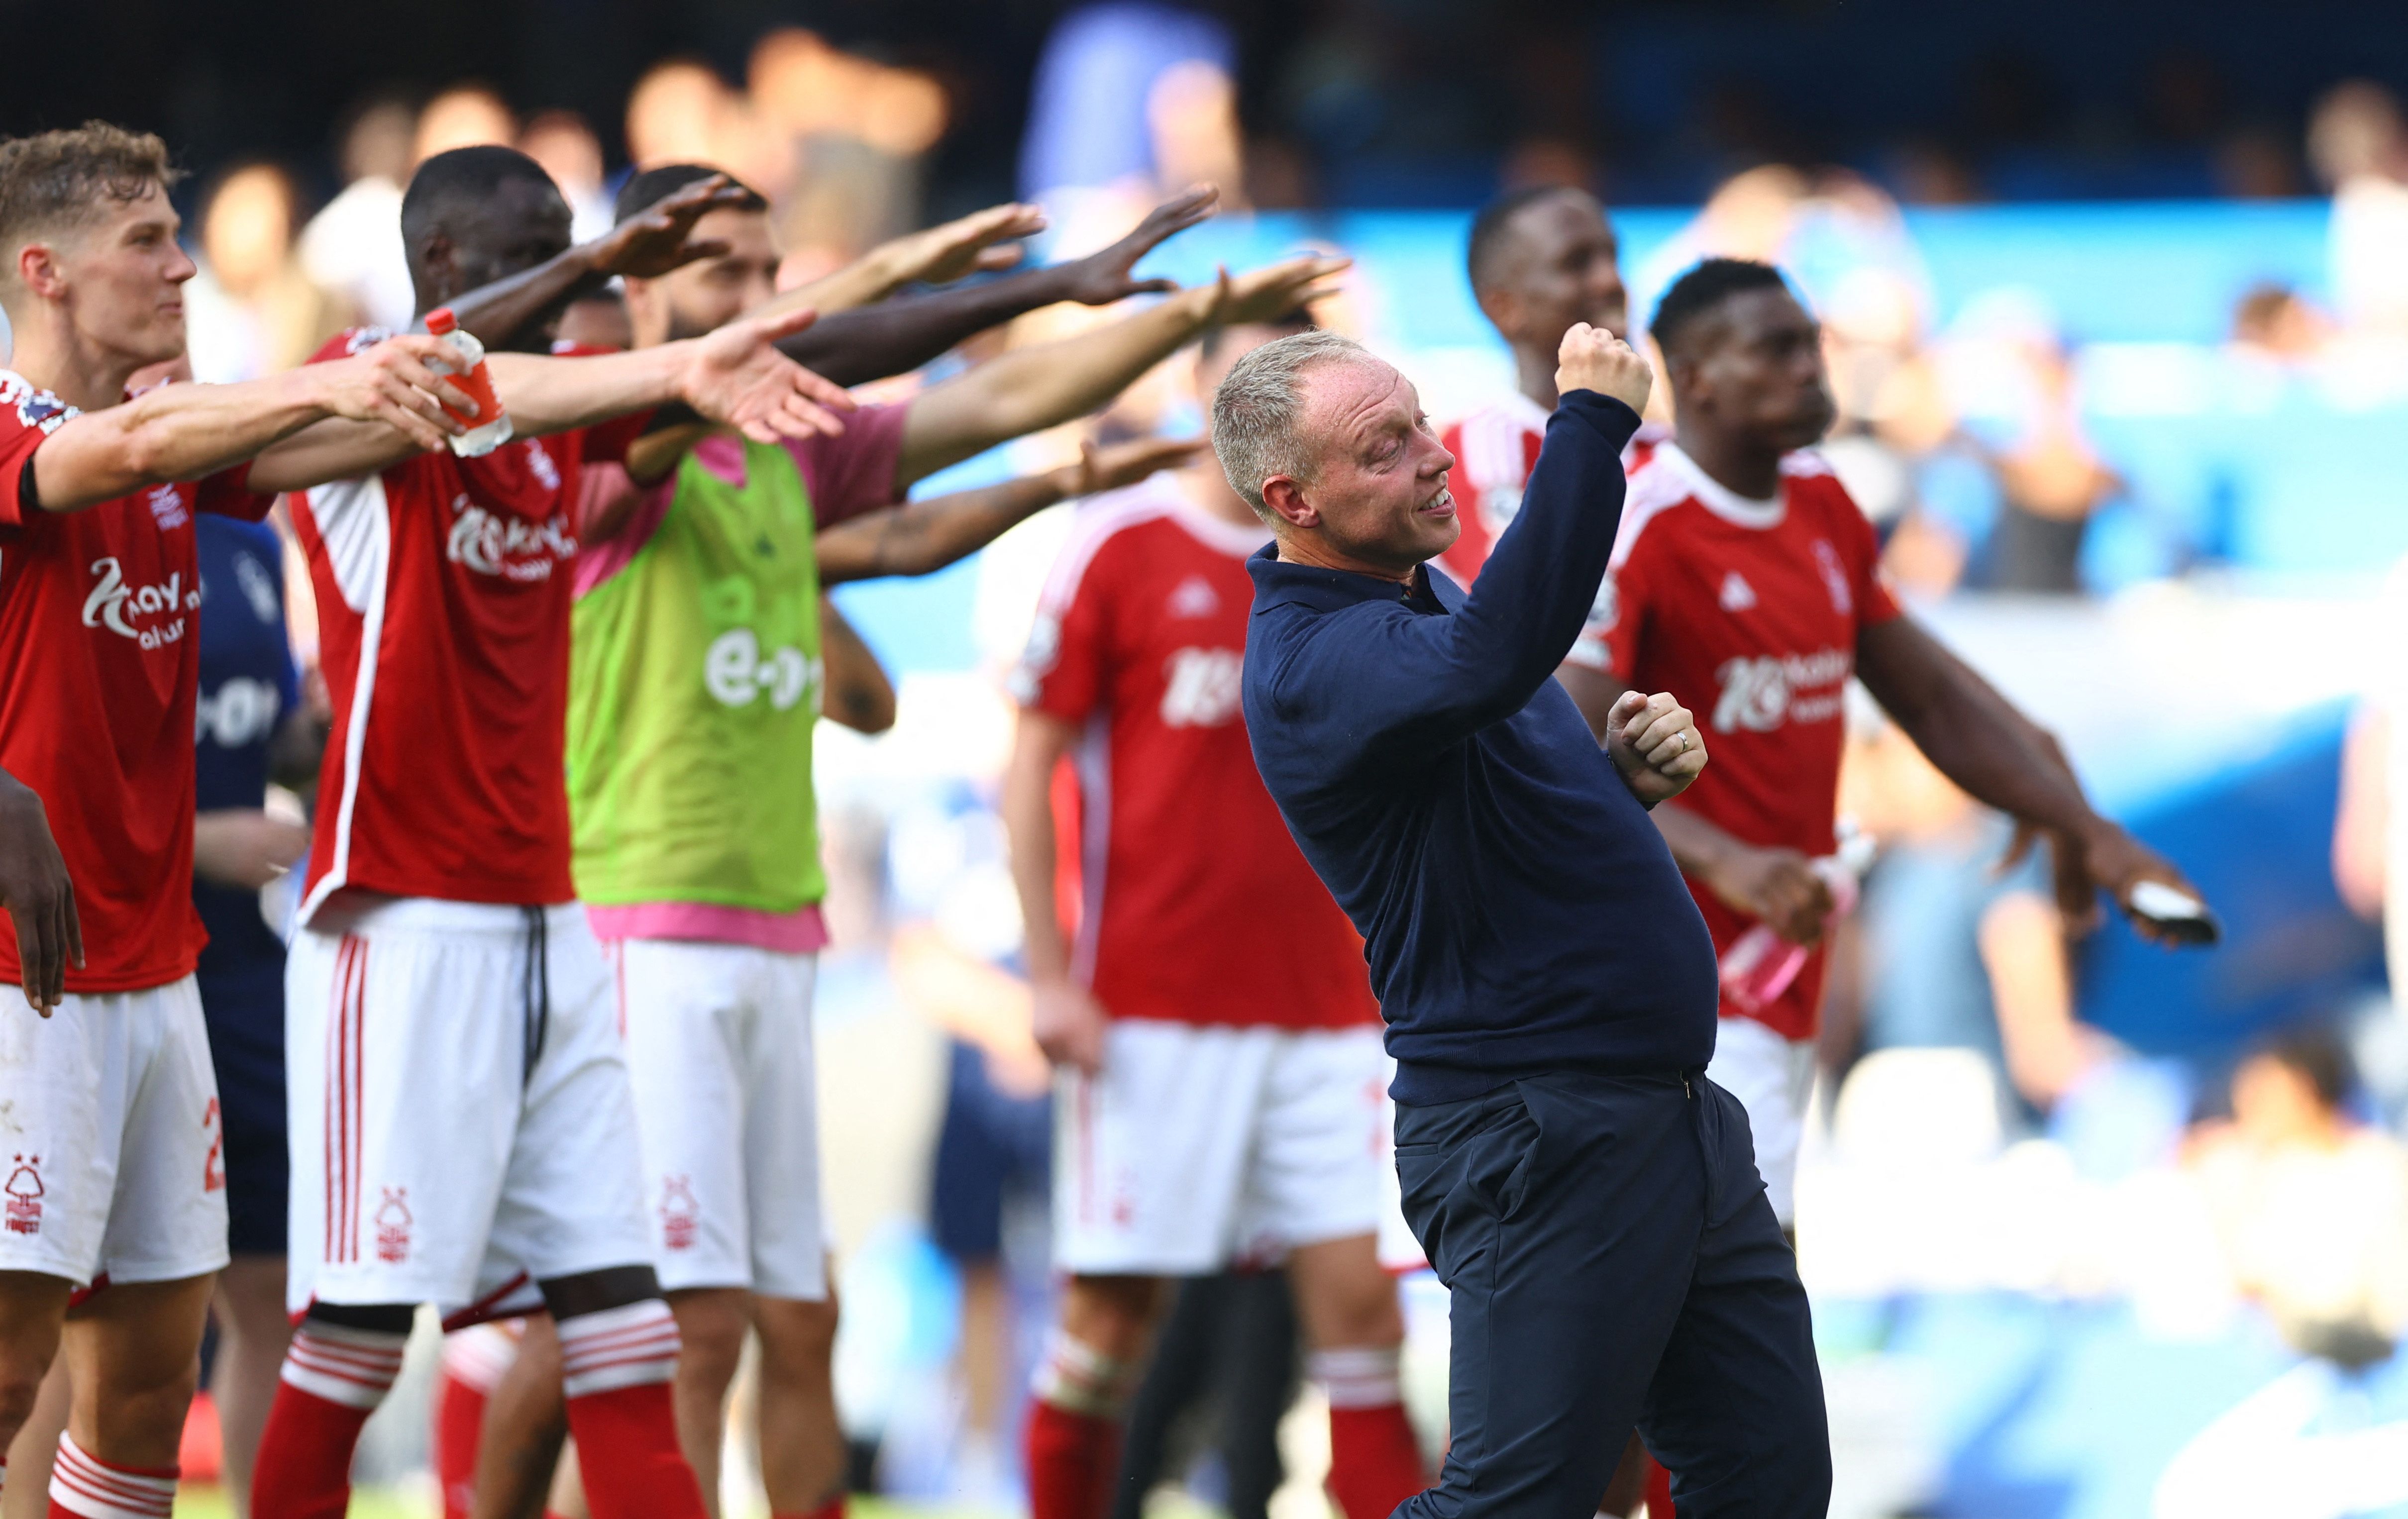 Nottingham Forest manager Steve Cooper celebrates after the match